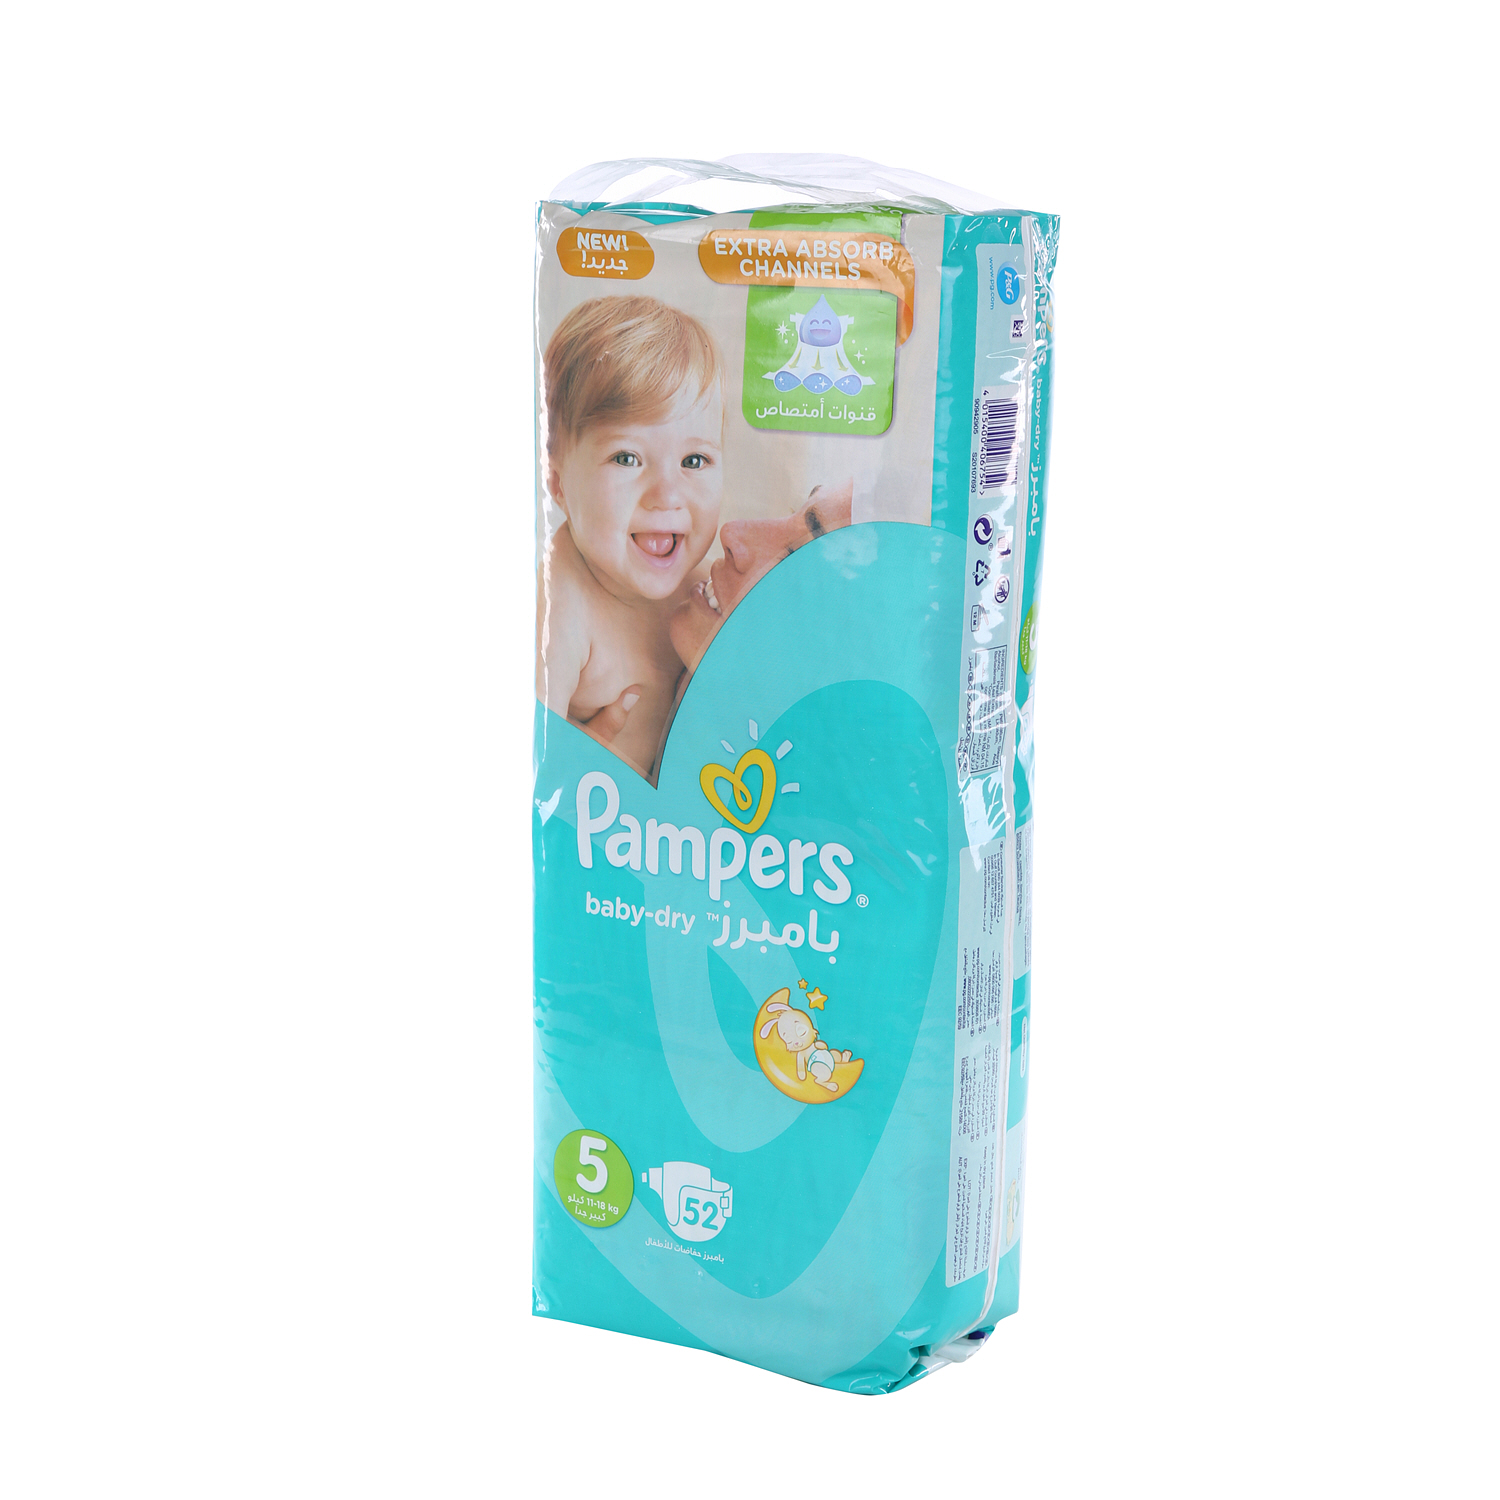 Pampers Baby Dry Jumbo Pack Junior 52 Pack